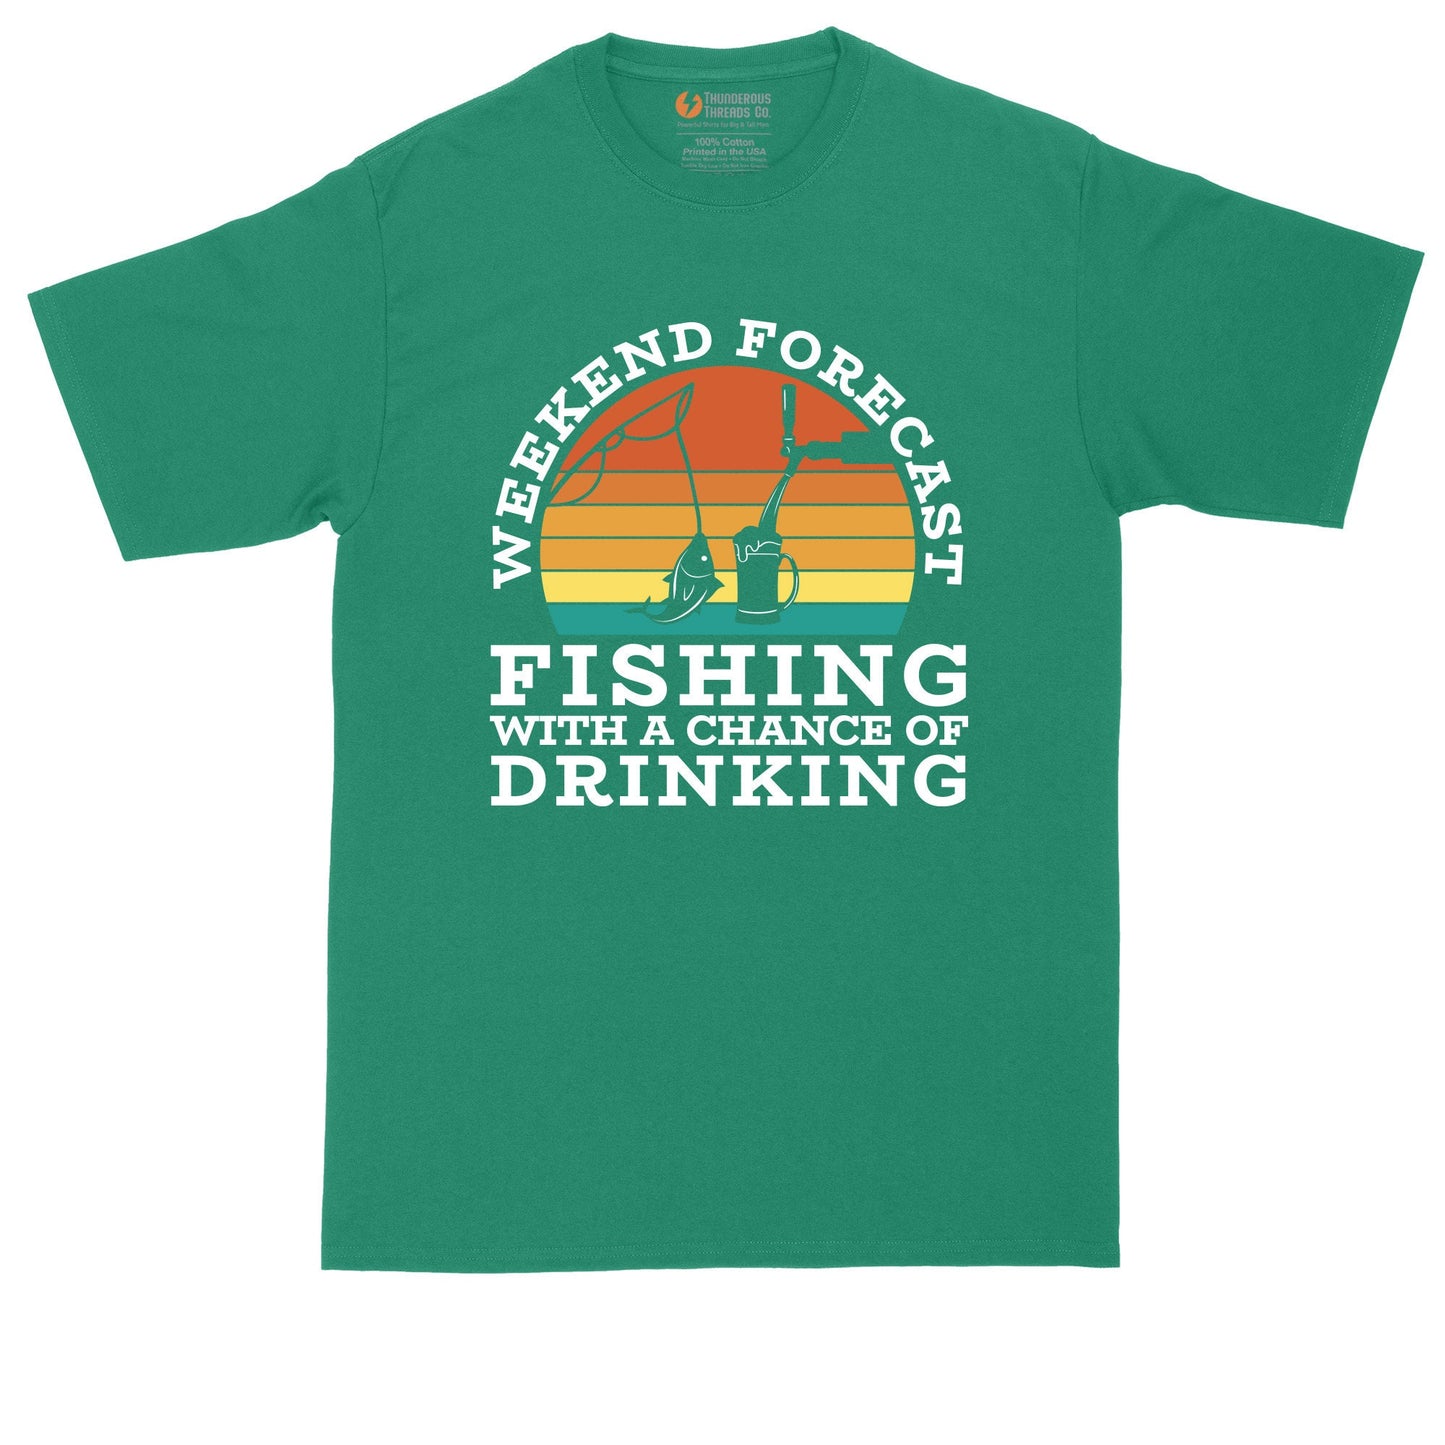 Weekend Forecast Fishing with a Chance of Drinking | Mens Big and Tall T-Shirt | Boating Shirt | Camping Shirt | Fishing Shirt